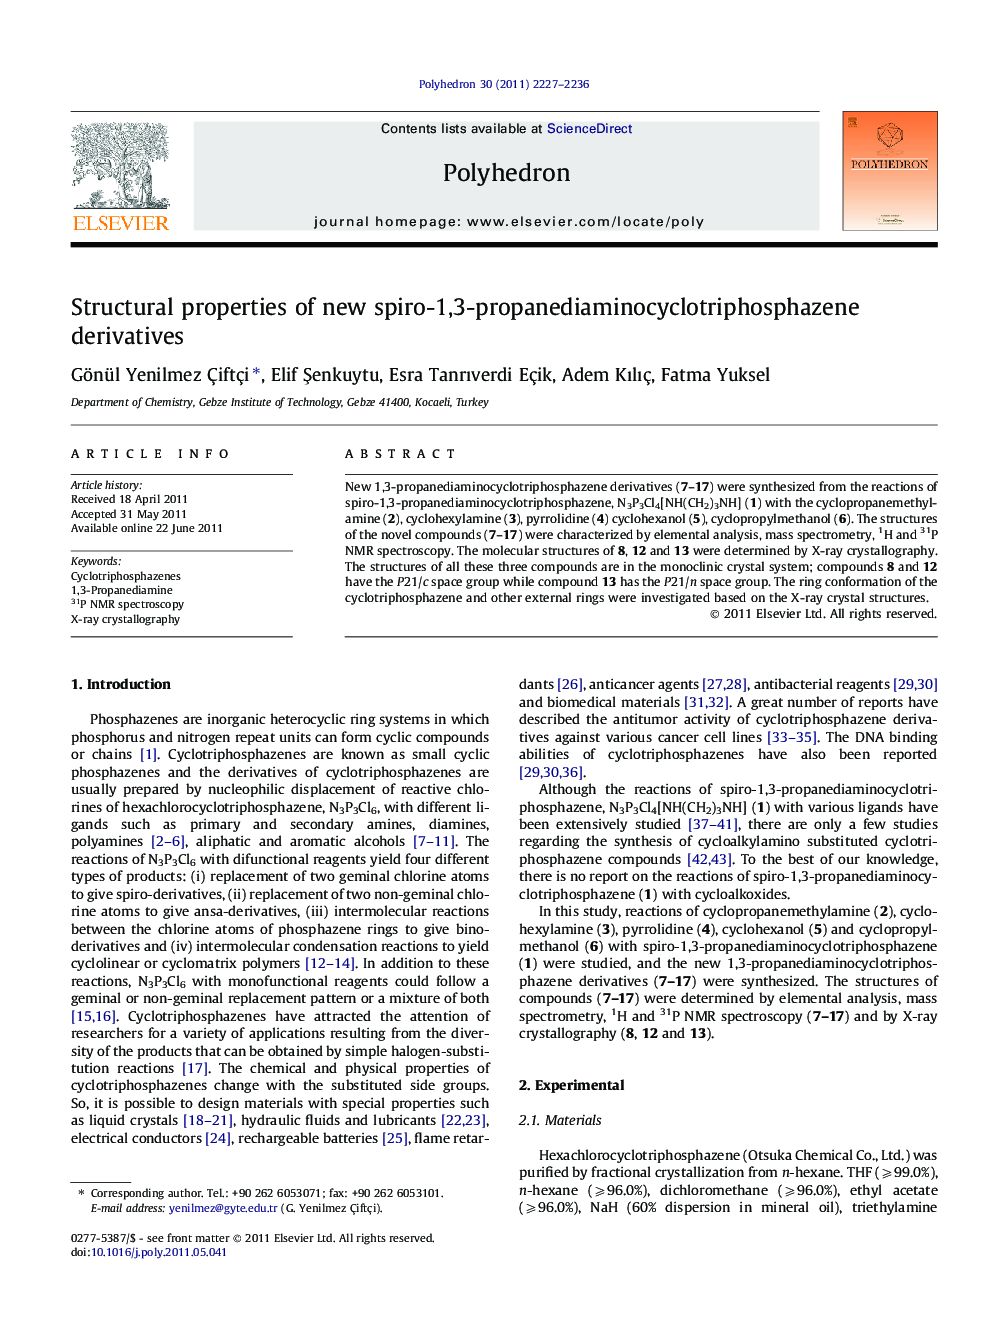 Structural properties of new spiro-1,3-propanediaminocyclotriphosphazene derivatives